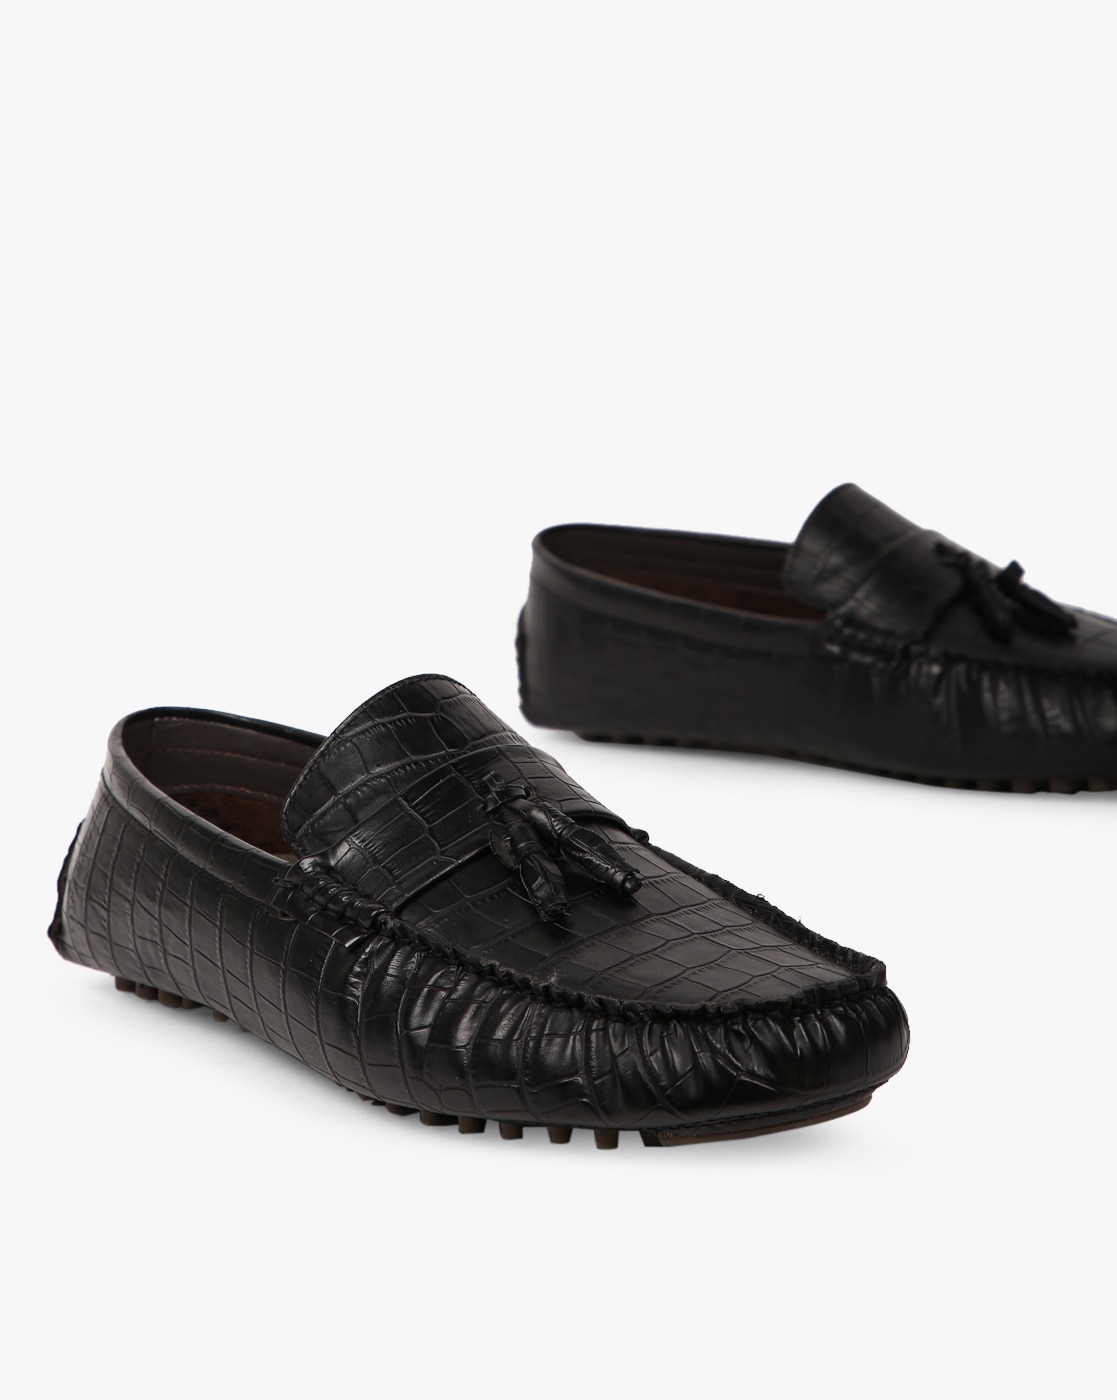 mens black boat shoes